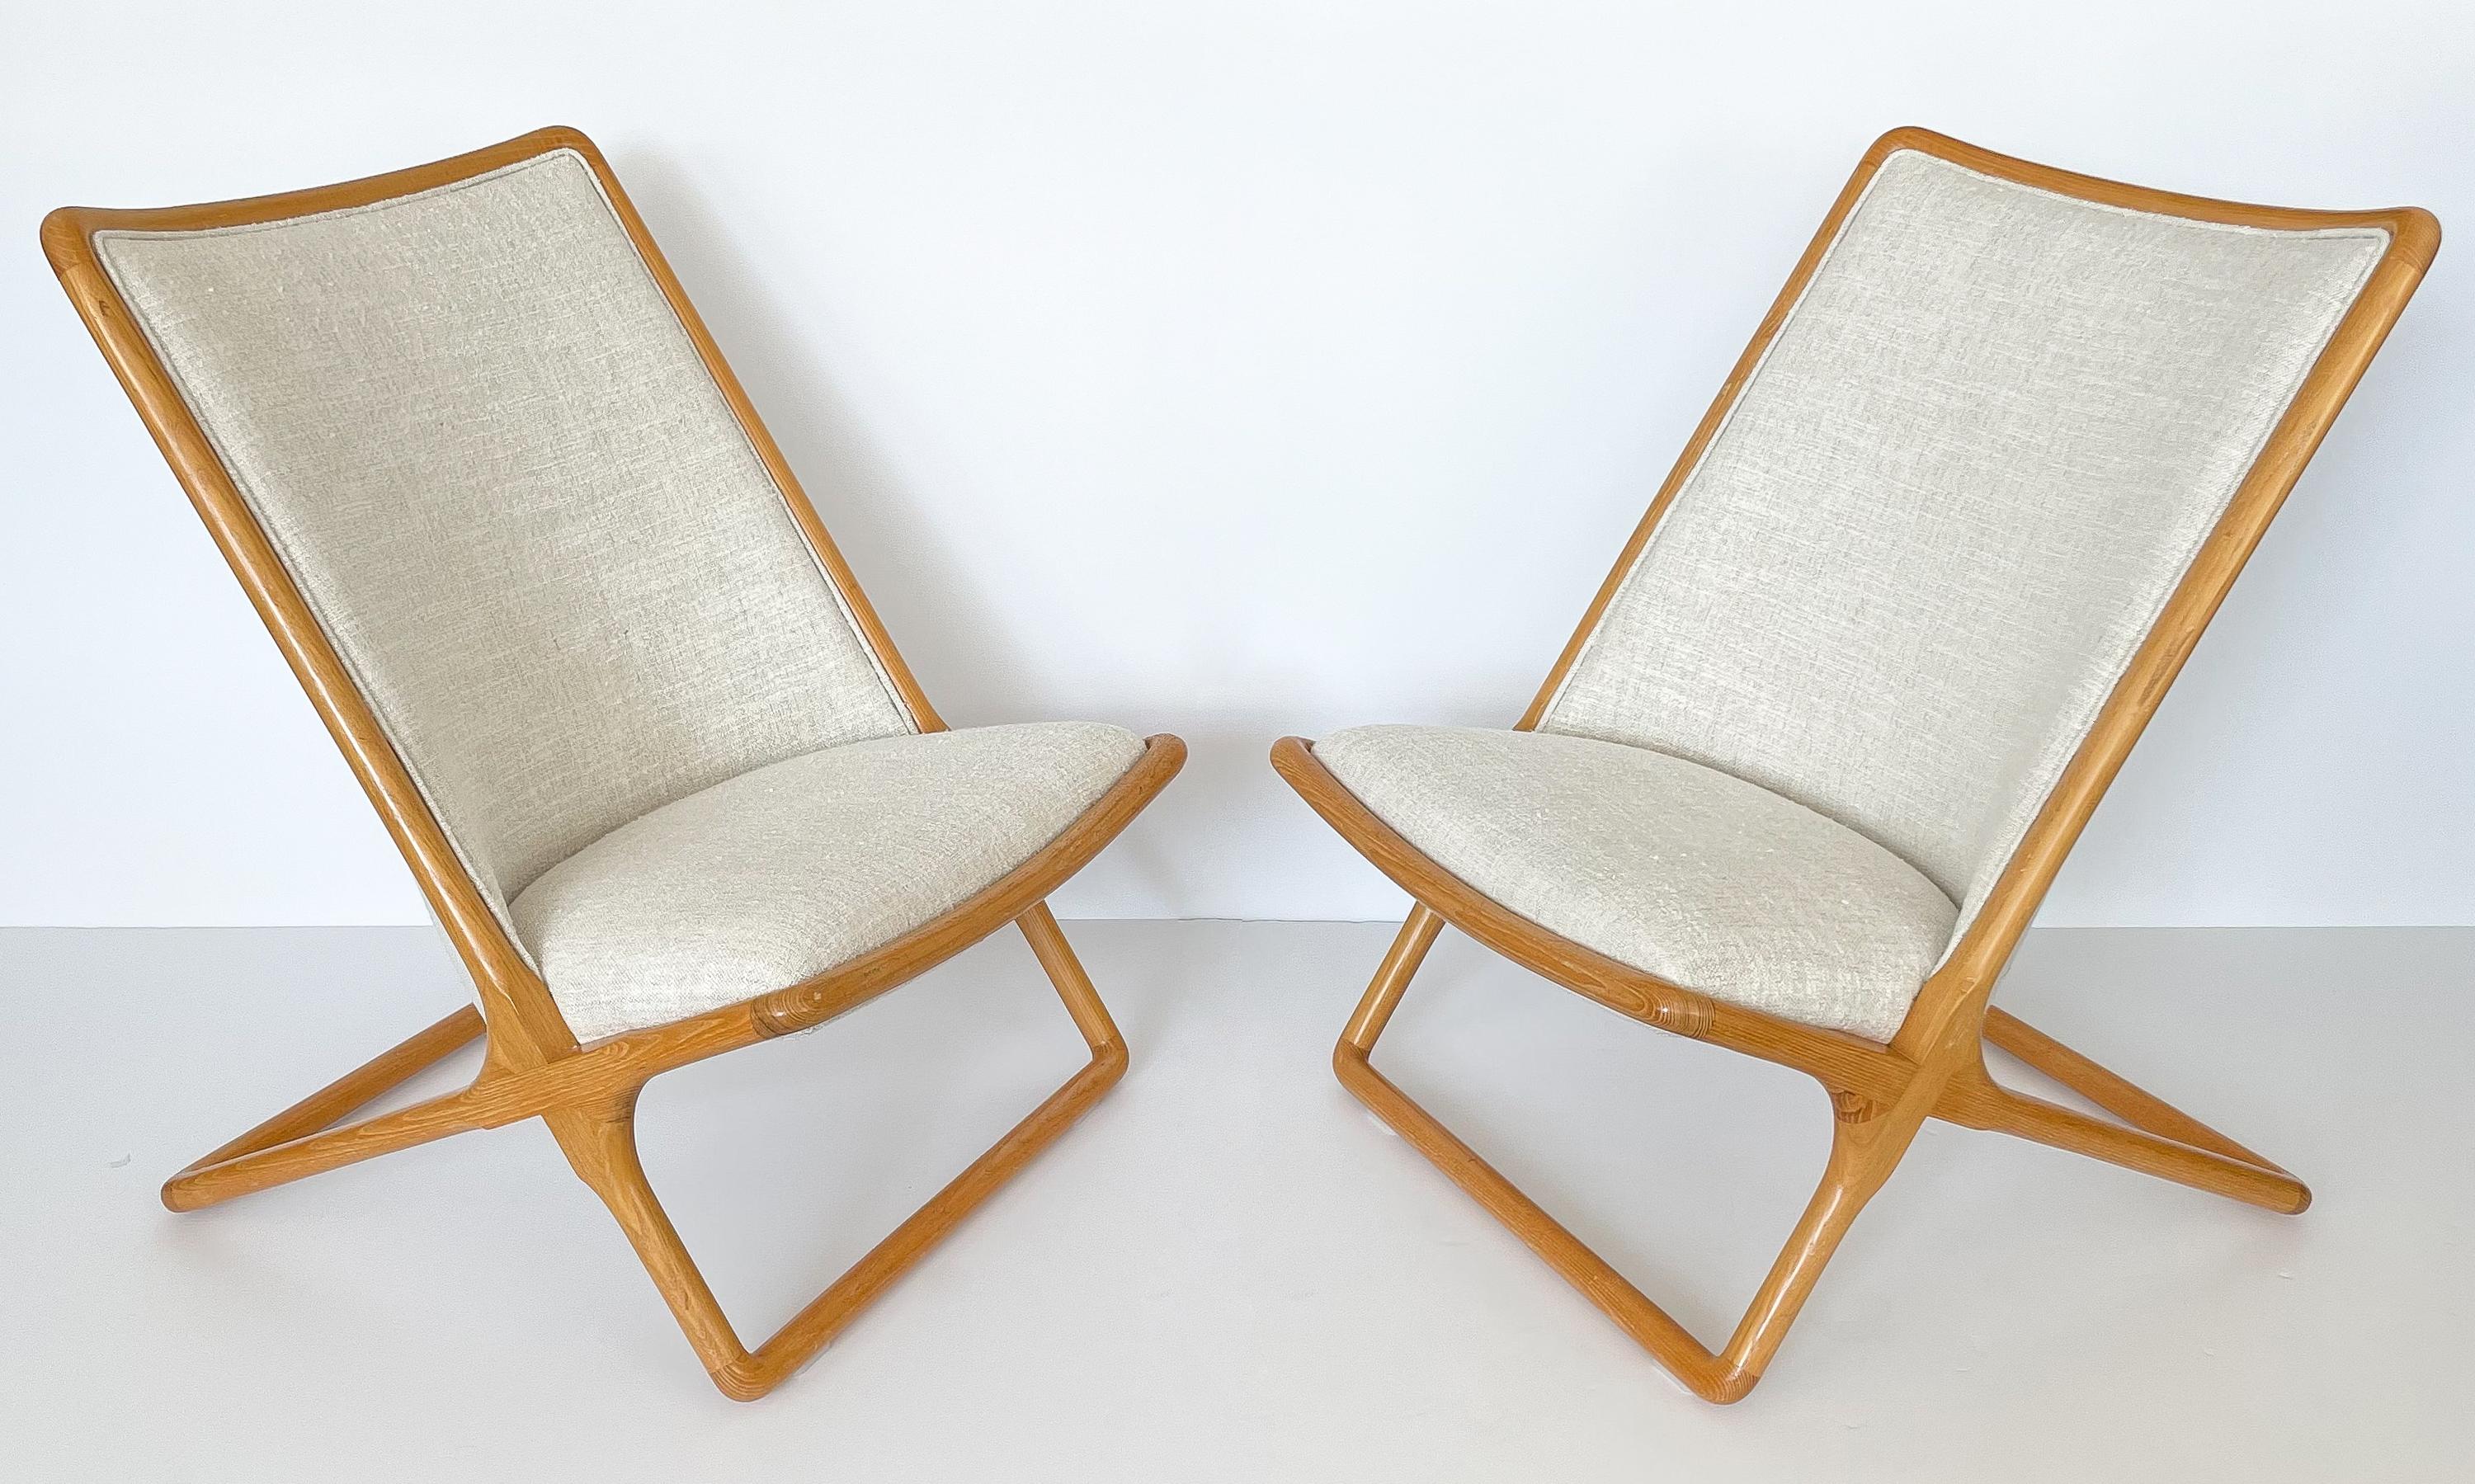 Pair of Ward Bennett scissor lounge chairs for Brickel Associates, circa 1970s. Originally designed in 1964 by Ward Bennett (1917-2003) for Brickel Associates. With his Scissor Chair, Ward Bennett echoed the form of hammock-style deck chairs popular